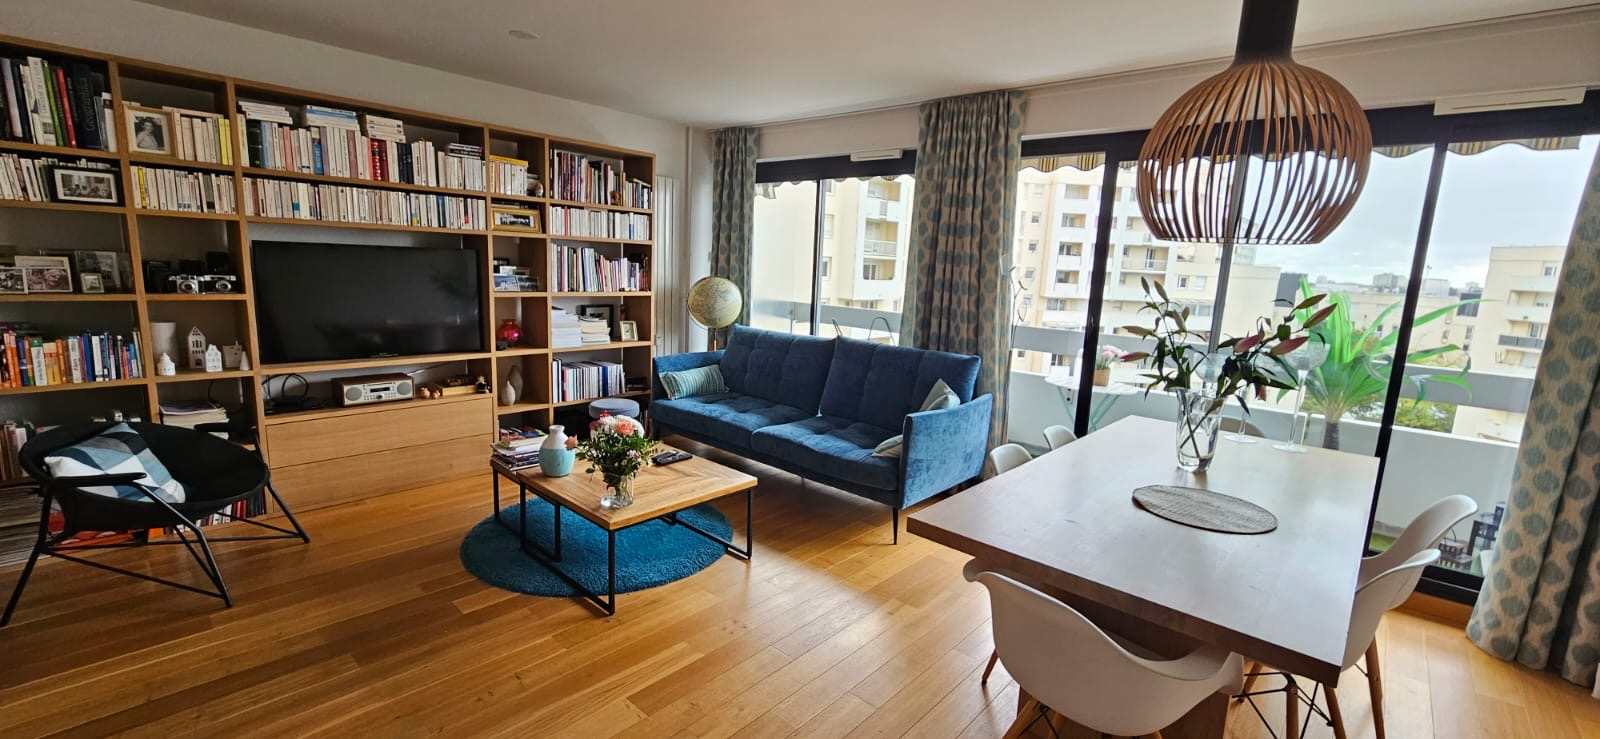 Appartement 3 pièces - 68 m² environ - 55750719c.jpg | Kermarrec Habitation